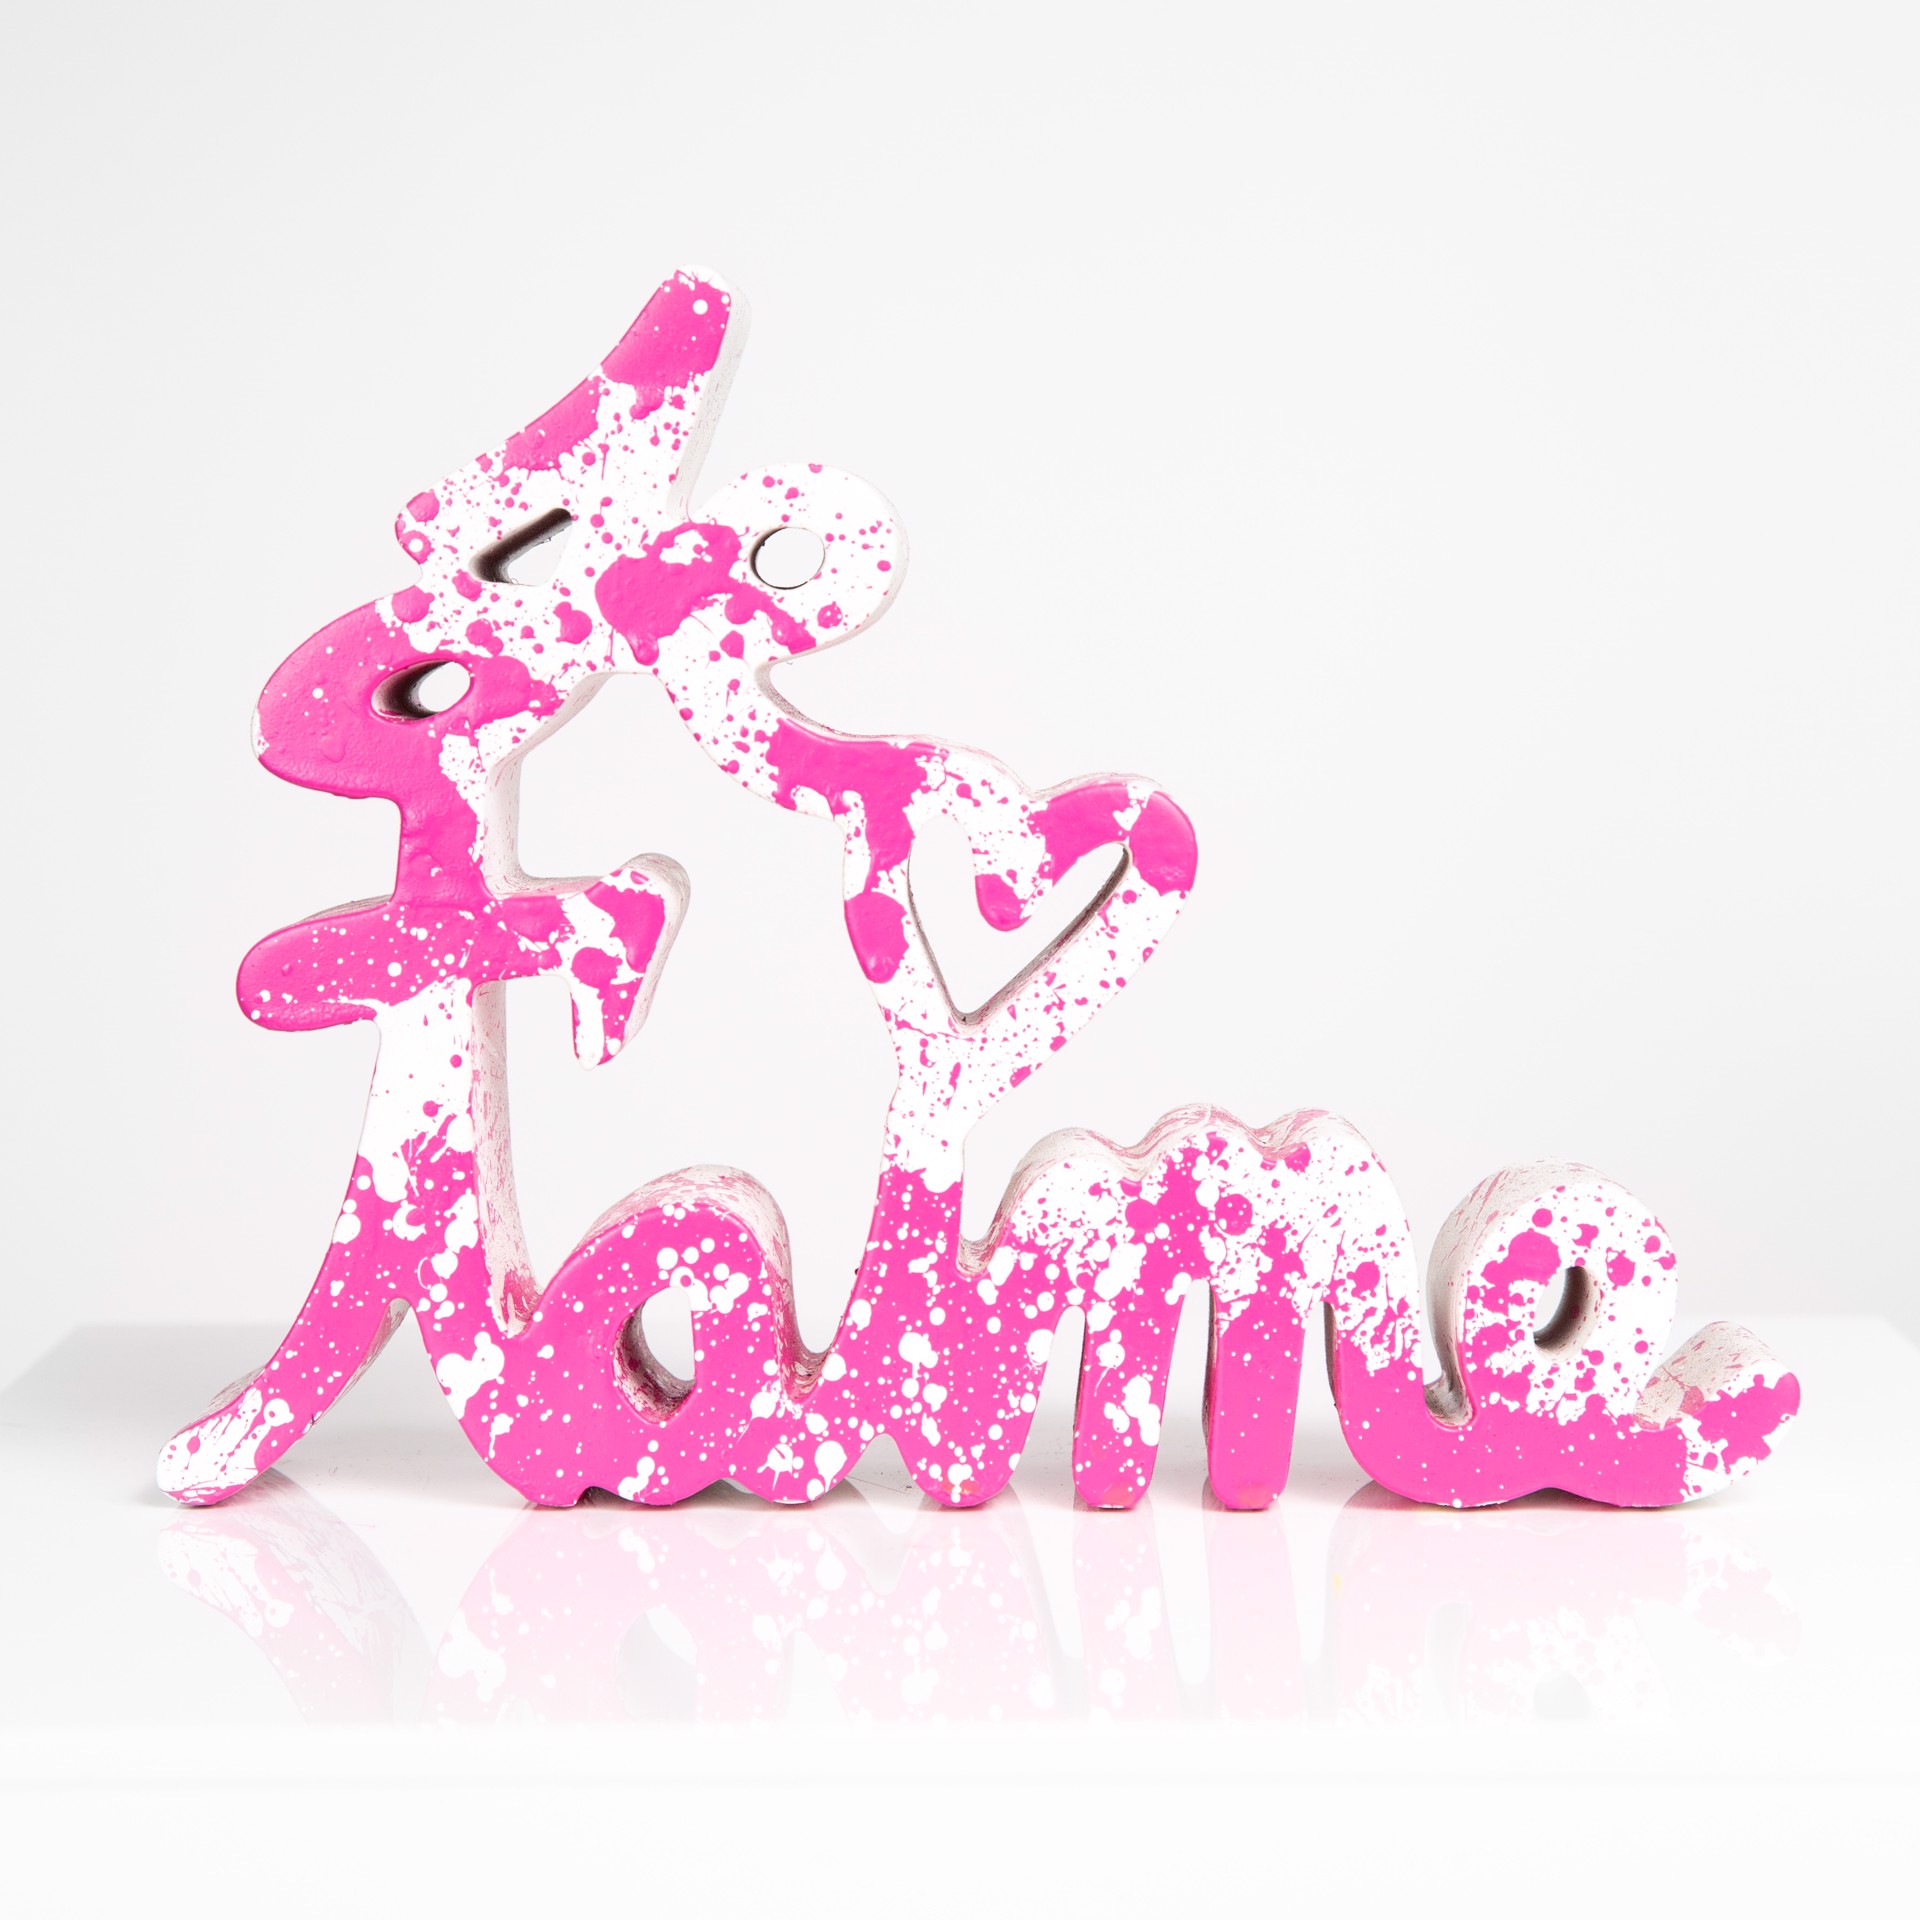 Je t'aime - Pink Splash by Mr.Brainwash